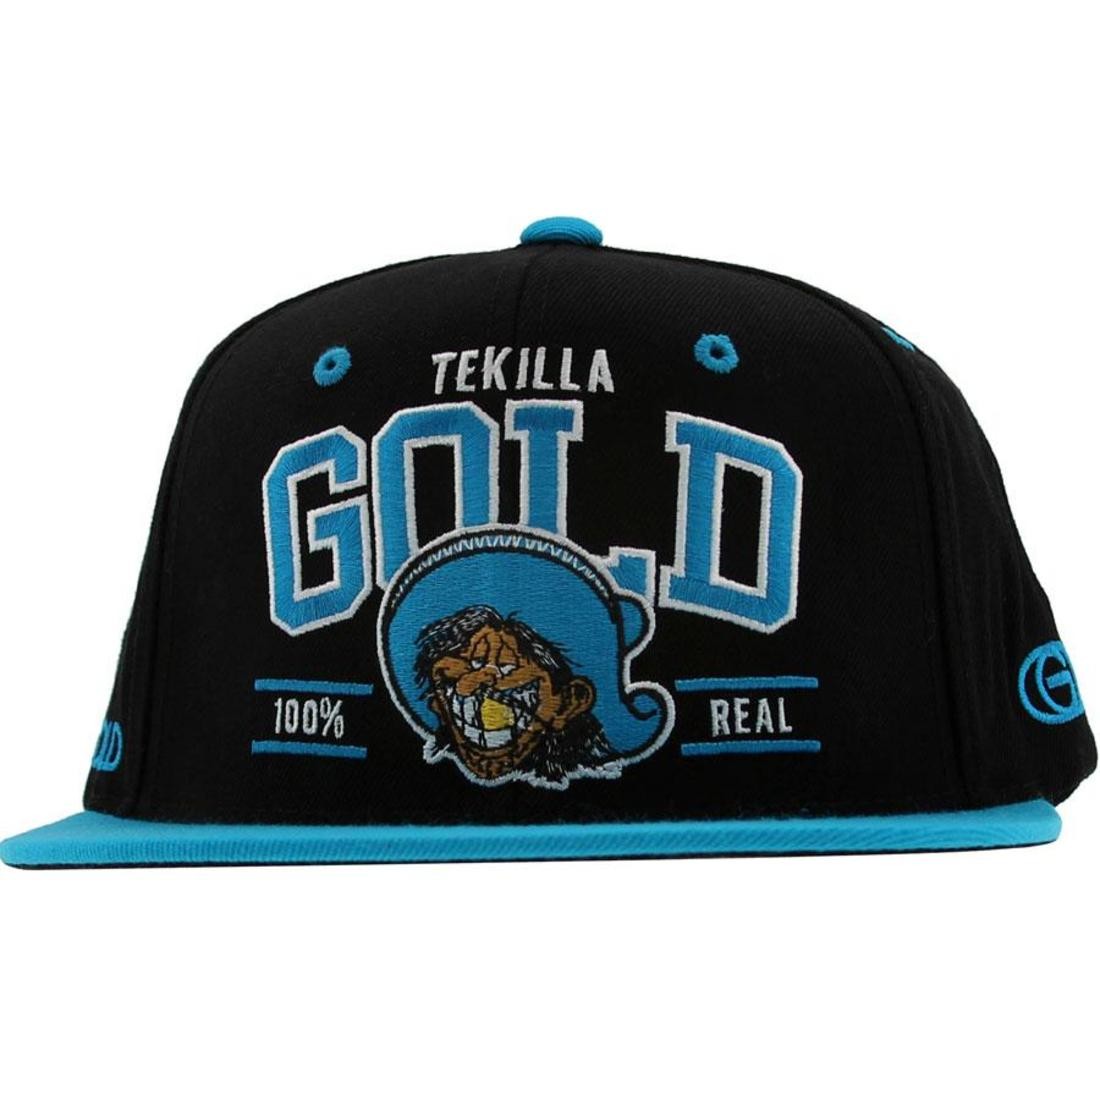 Gold Tekilla Starter Snapback Cap (black / turquoise)